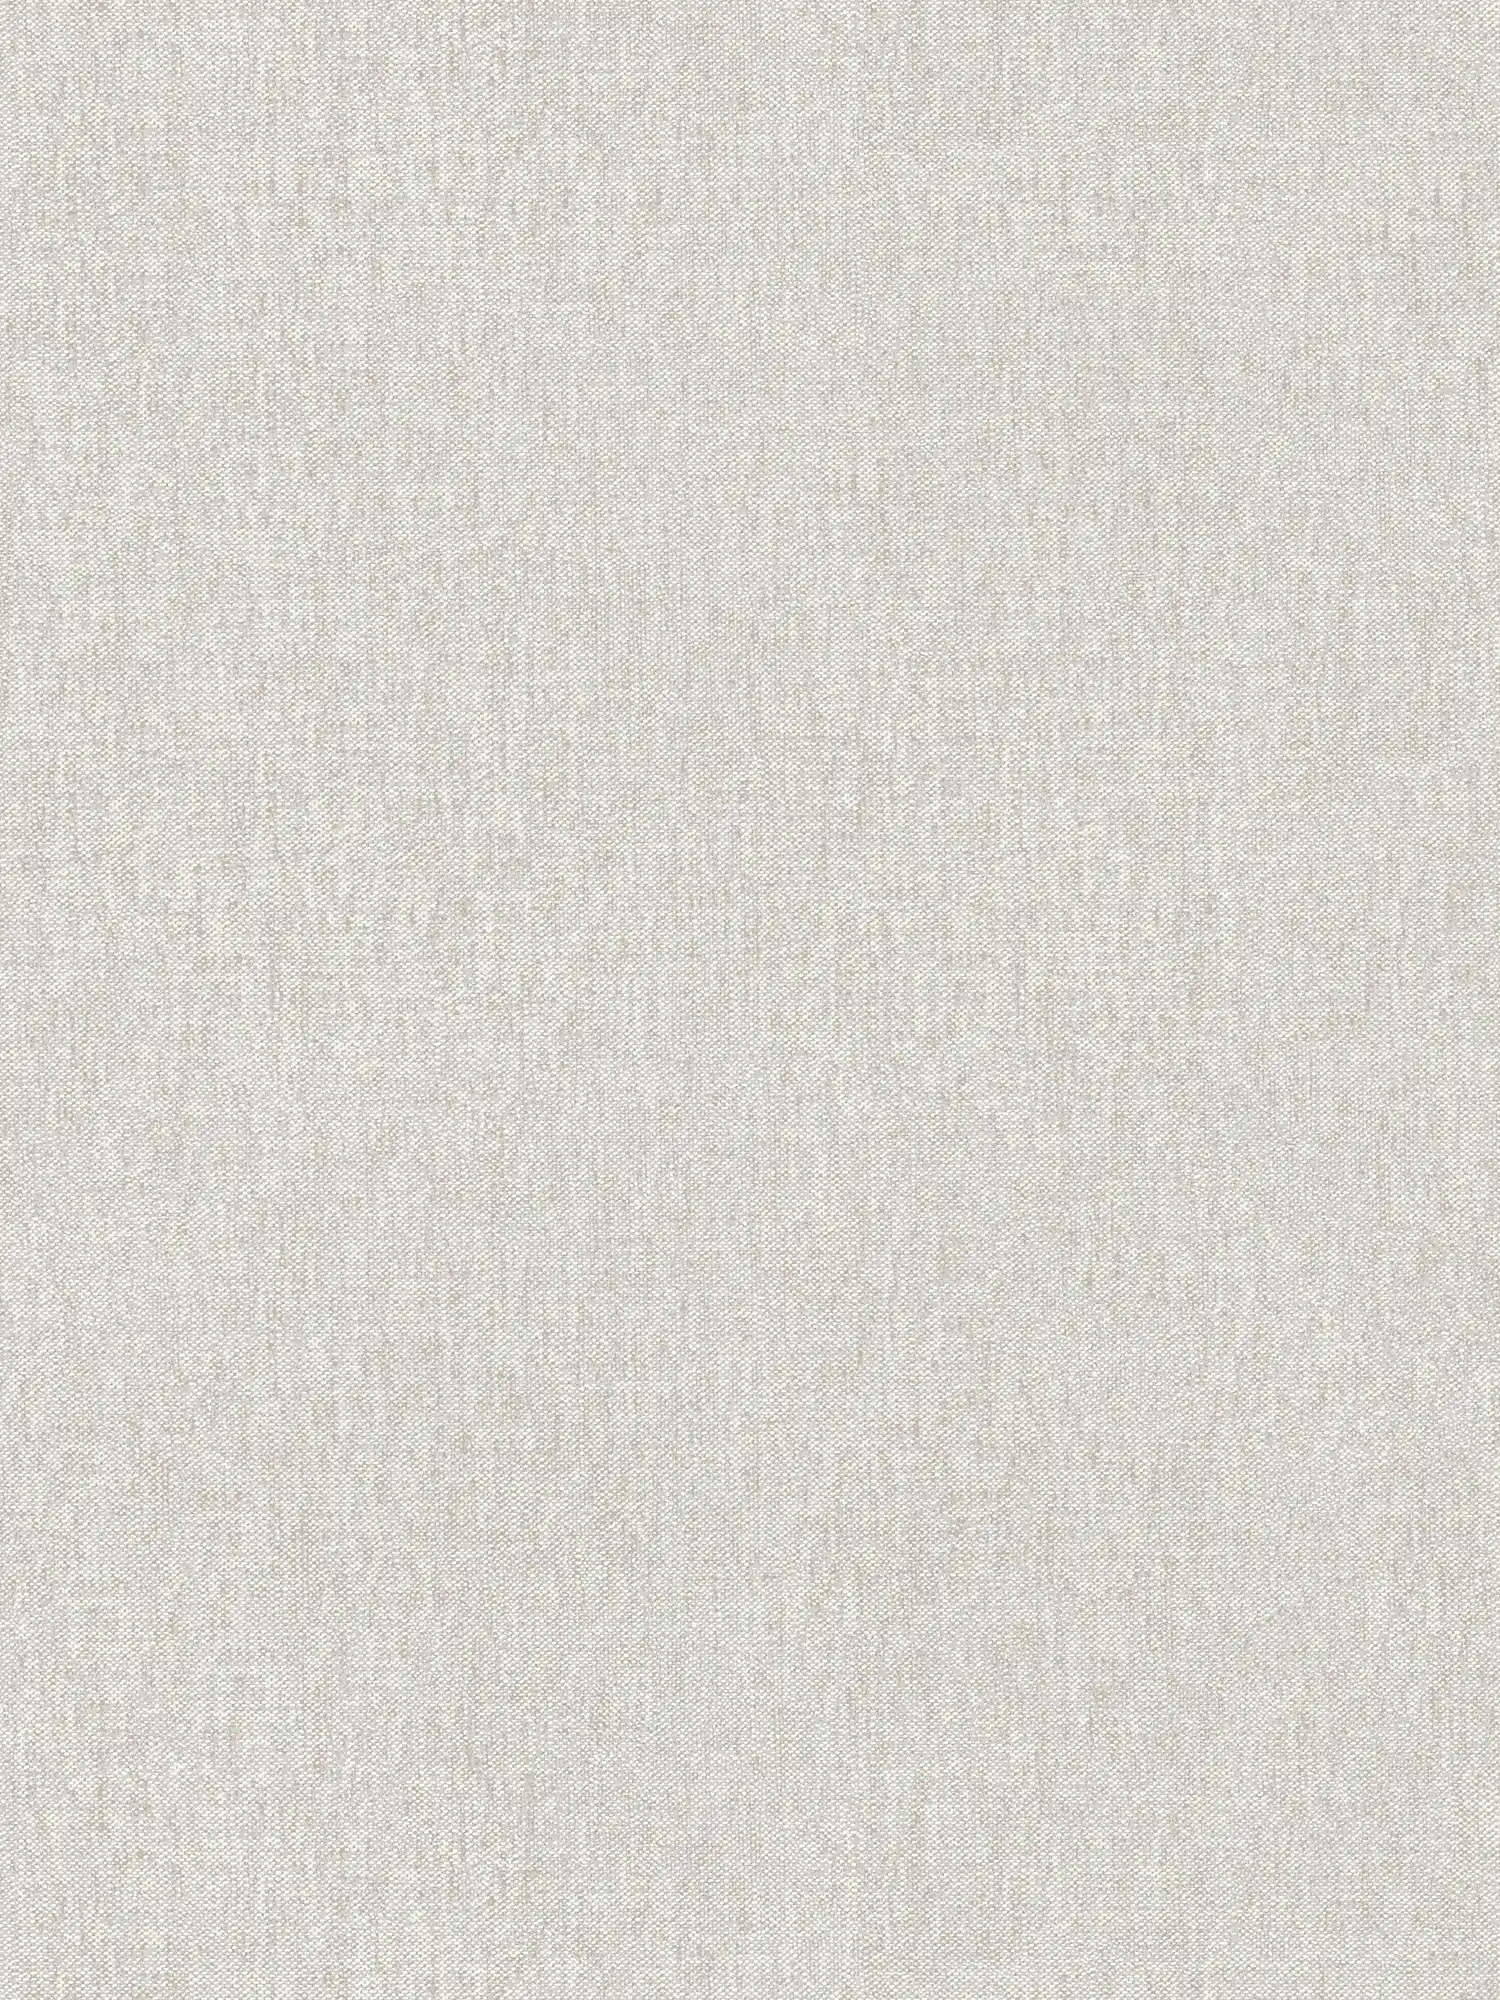 Carta da parati vintage grigio chiaro con motivo tessile - grigio, beige
